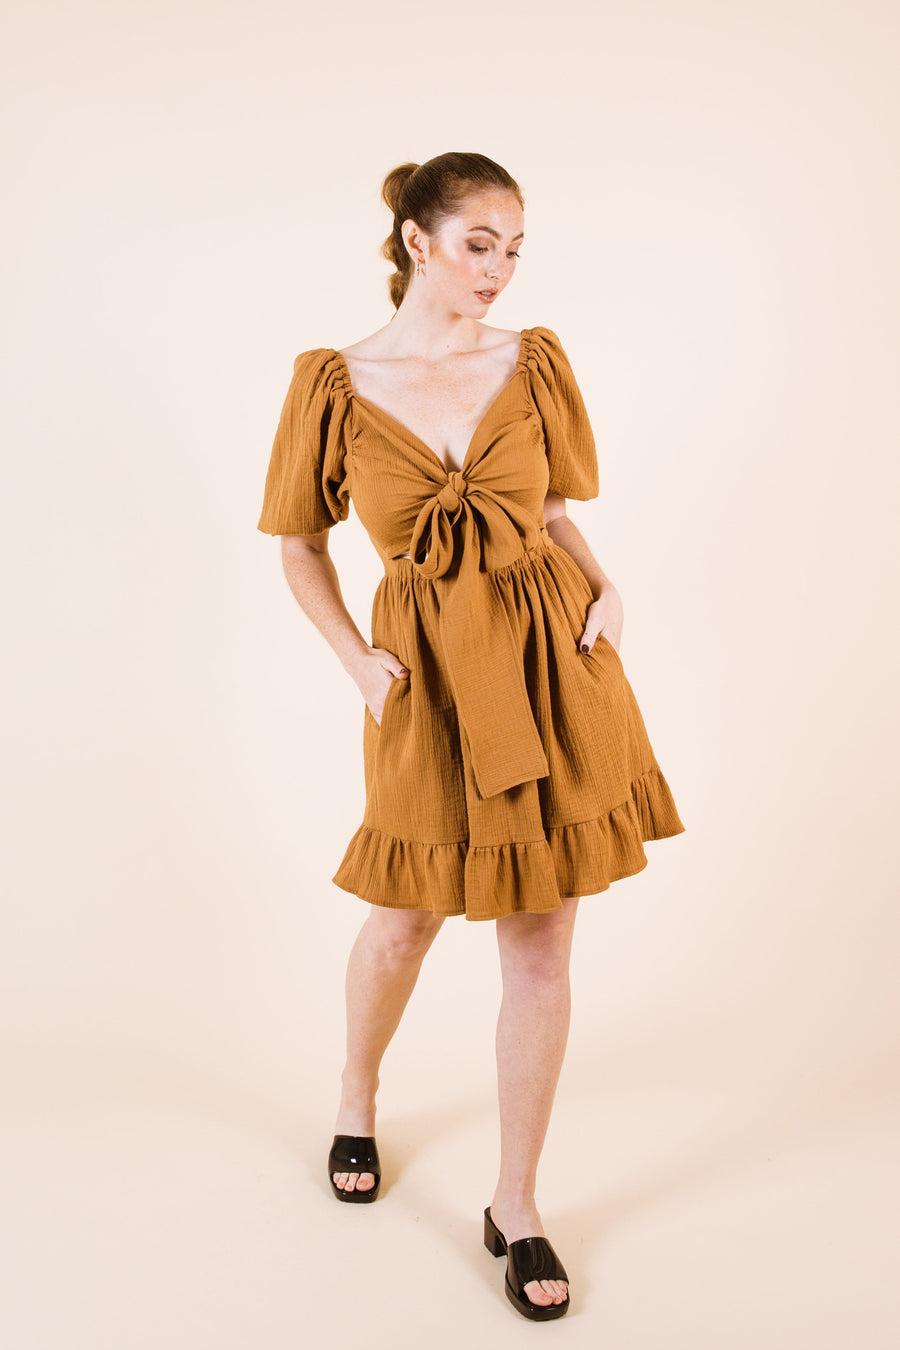 Estella Dress/Top pattern- Papercuts